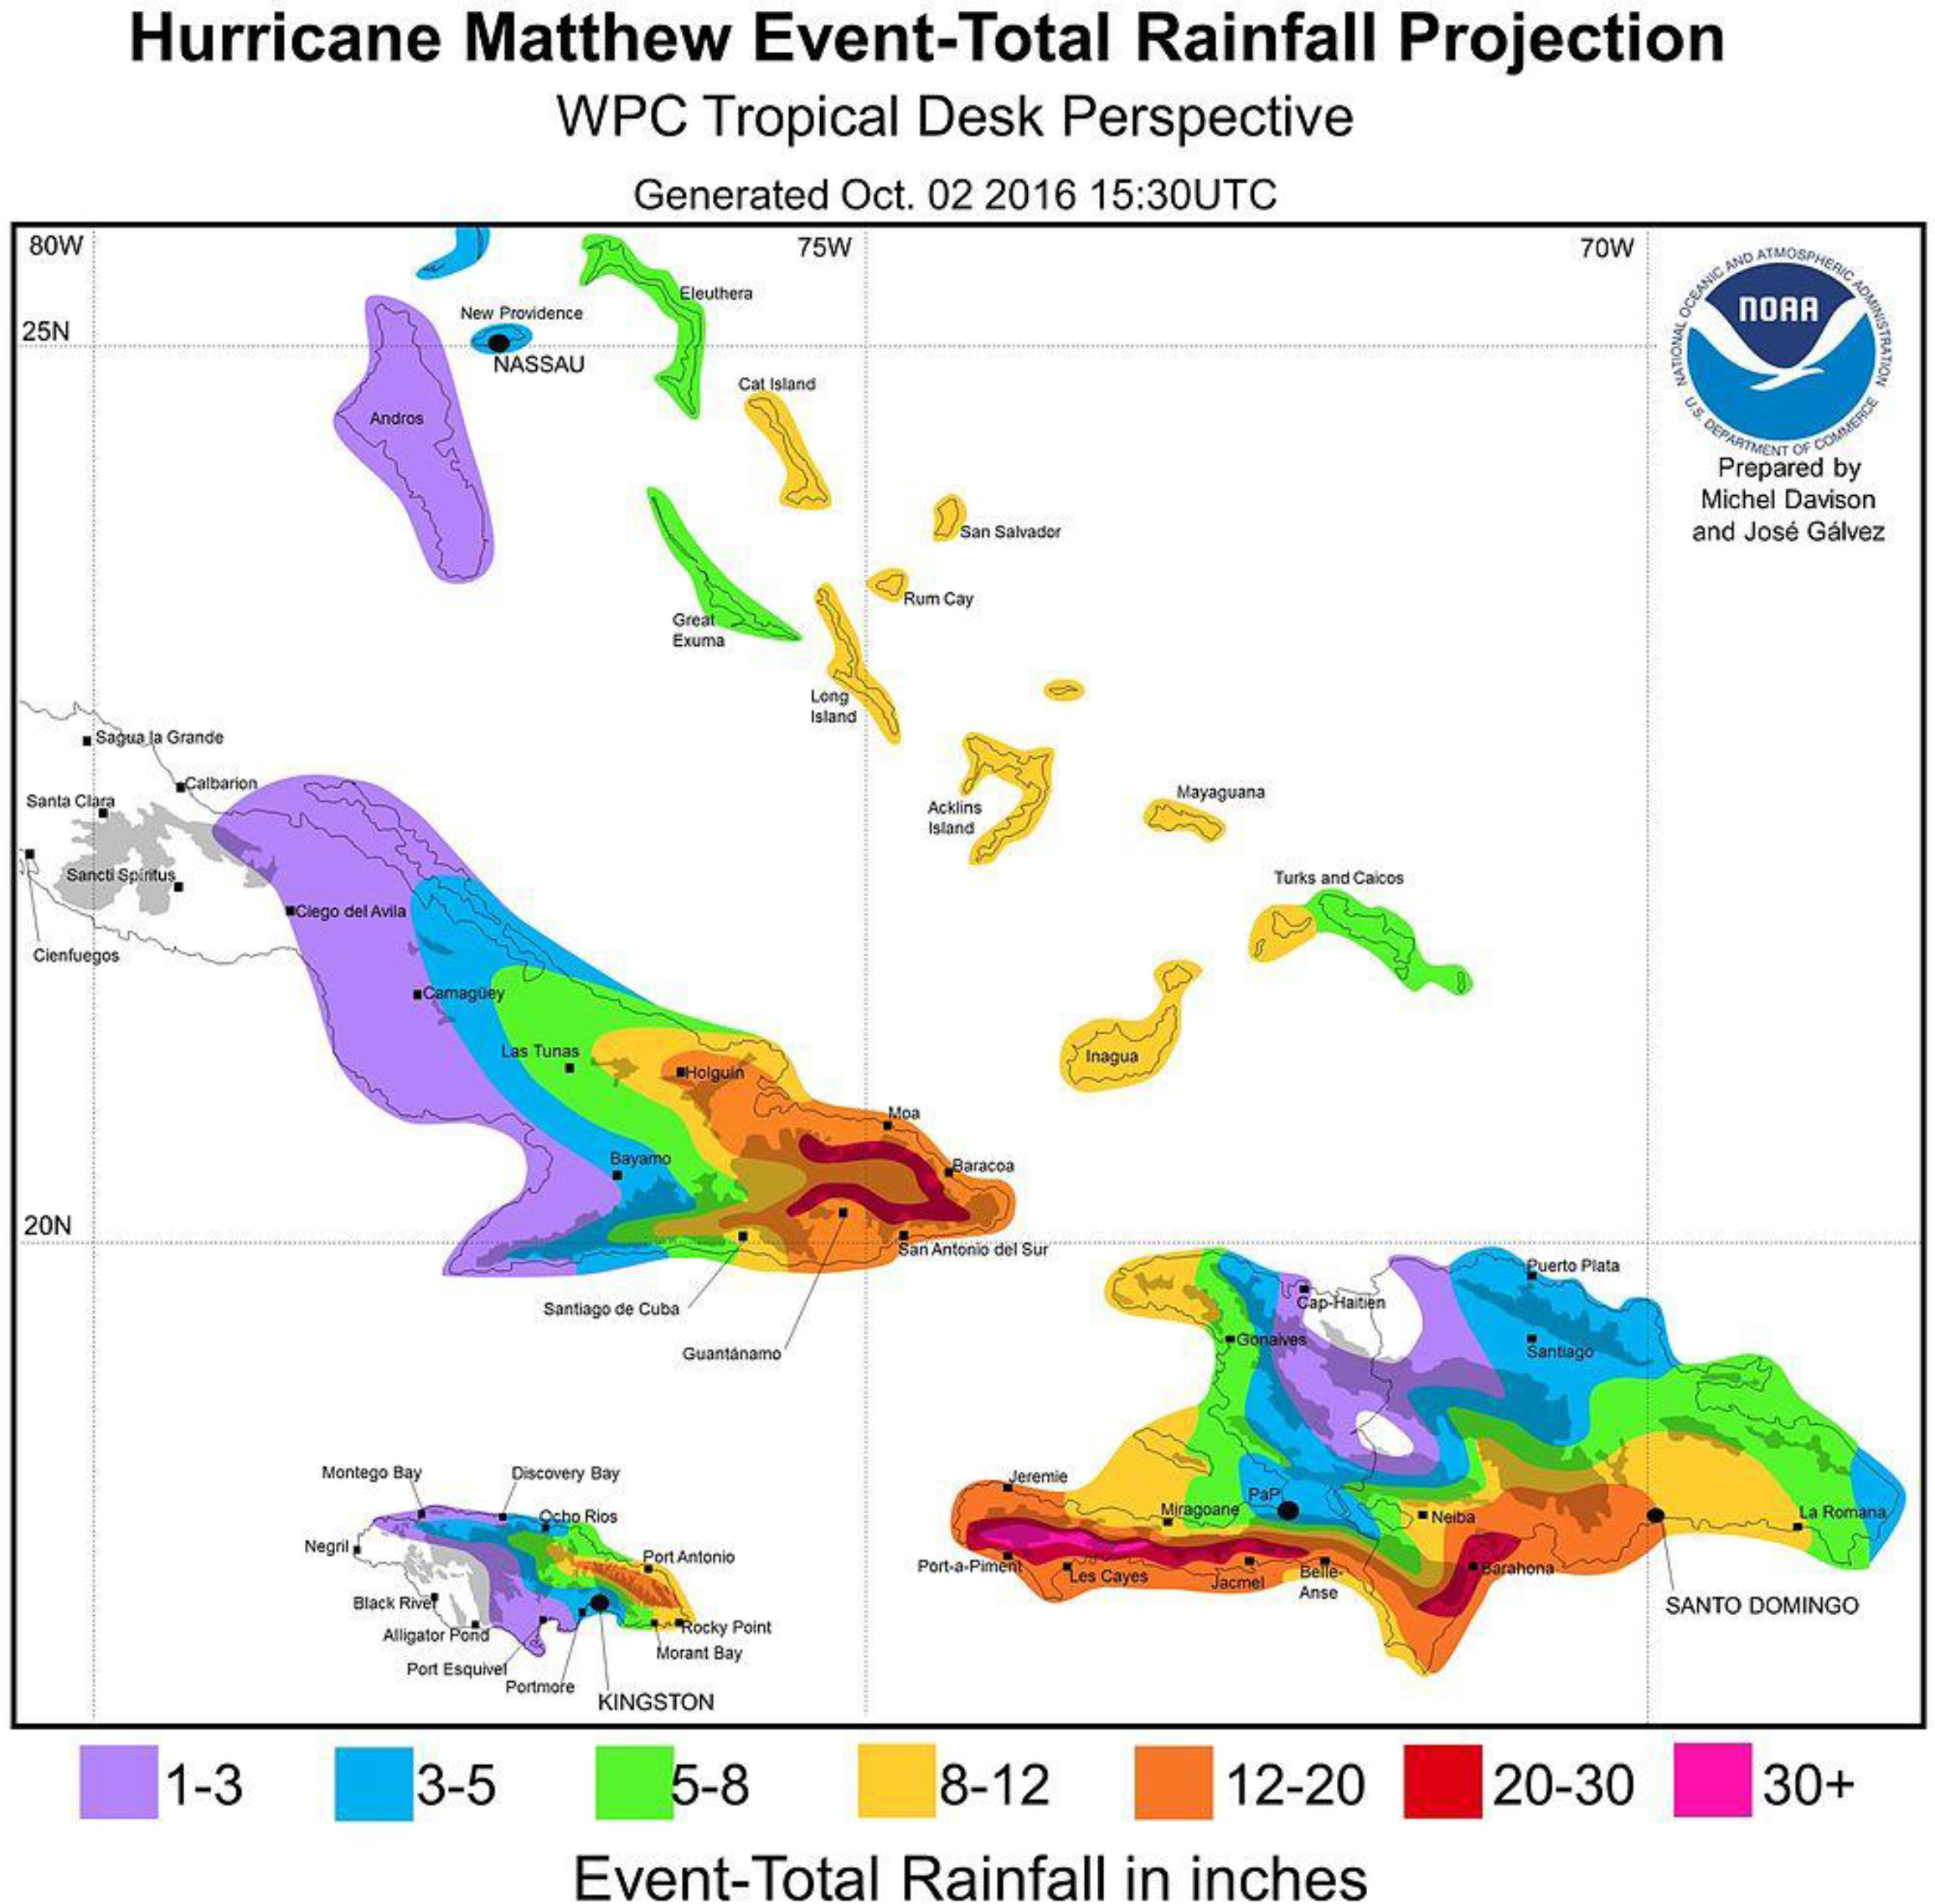 Source: https://en.wikipedia.org/wiki/Effects_of_Hurricane_Matthew_in_Haiti.